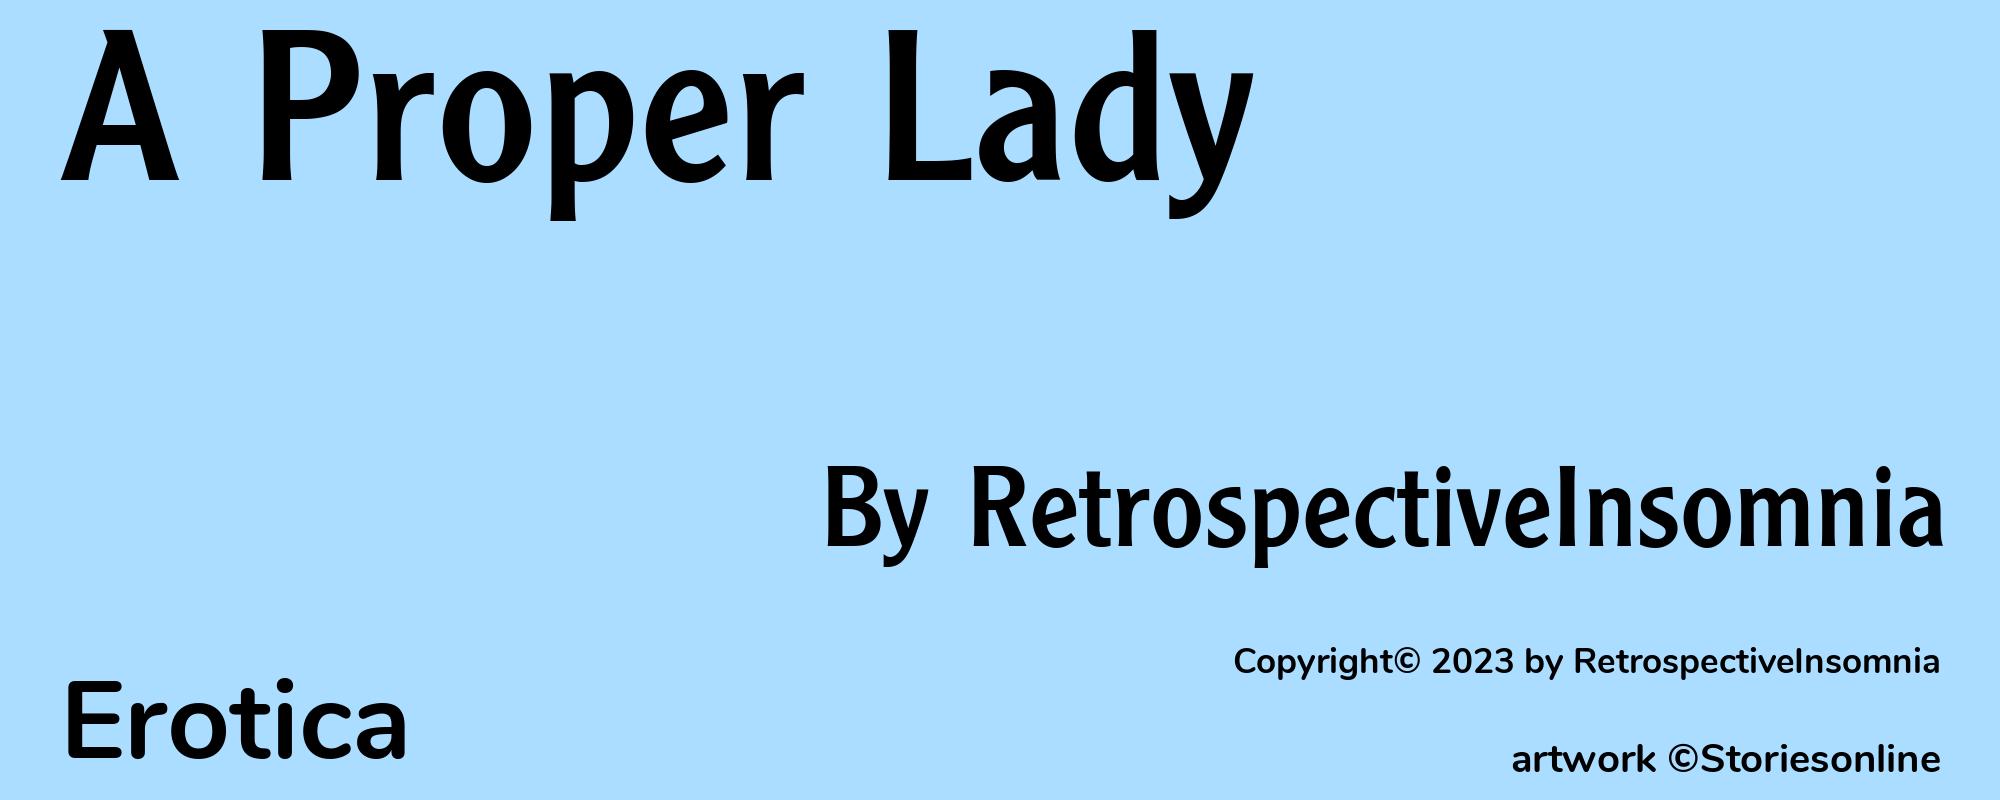 A Proper Lady - Cover